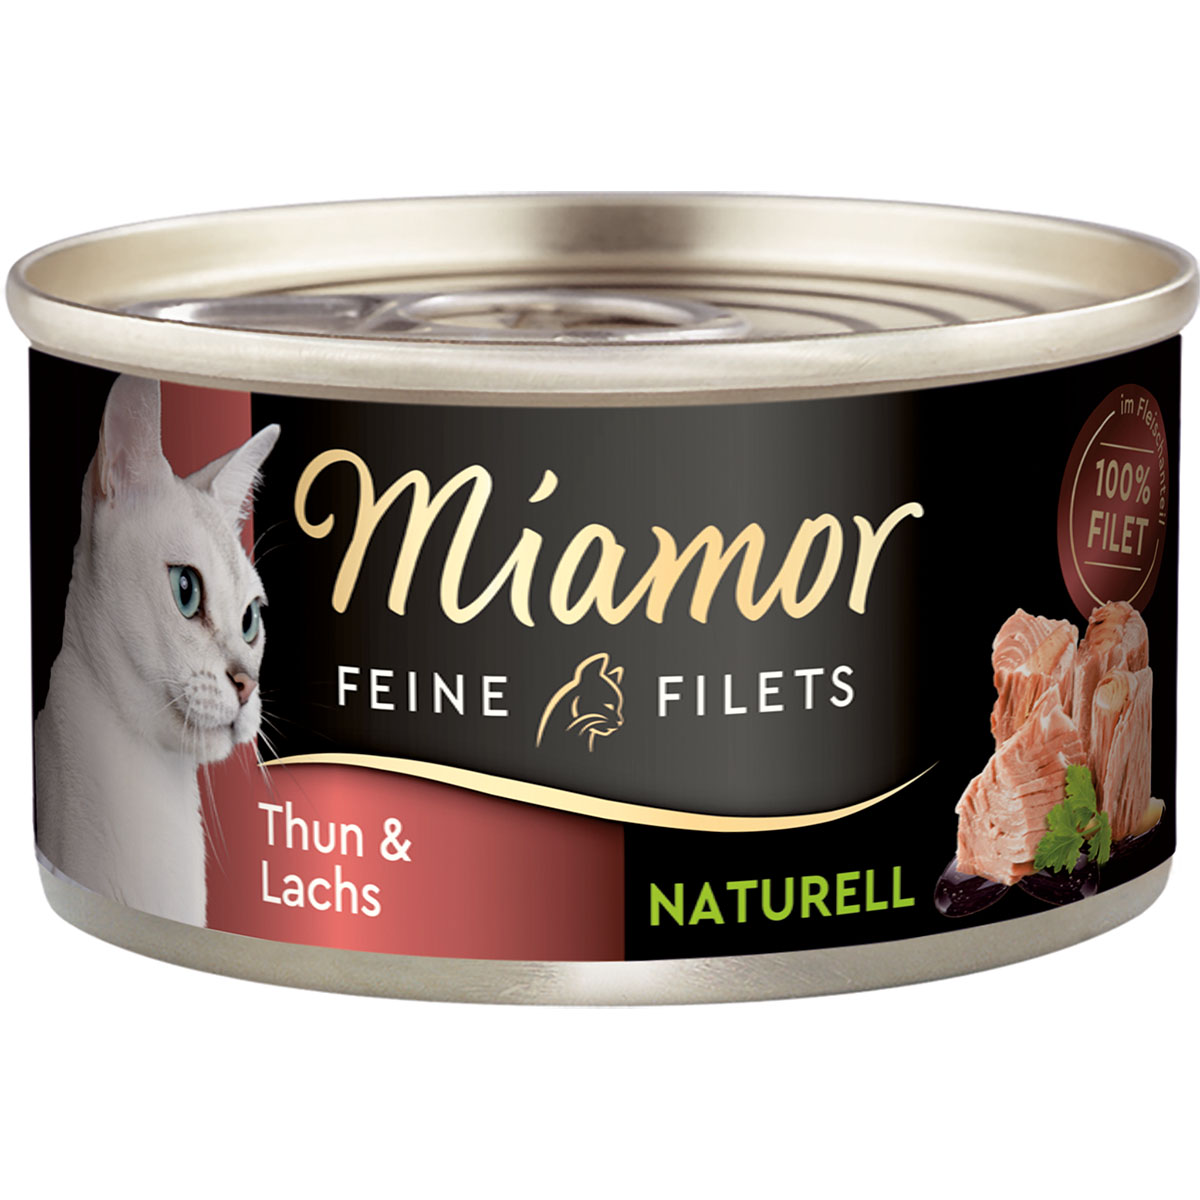 Miamor Feine Filets Naturelle, tuňák a losos, 80g plechovka